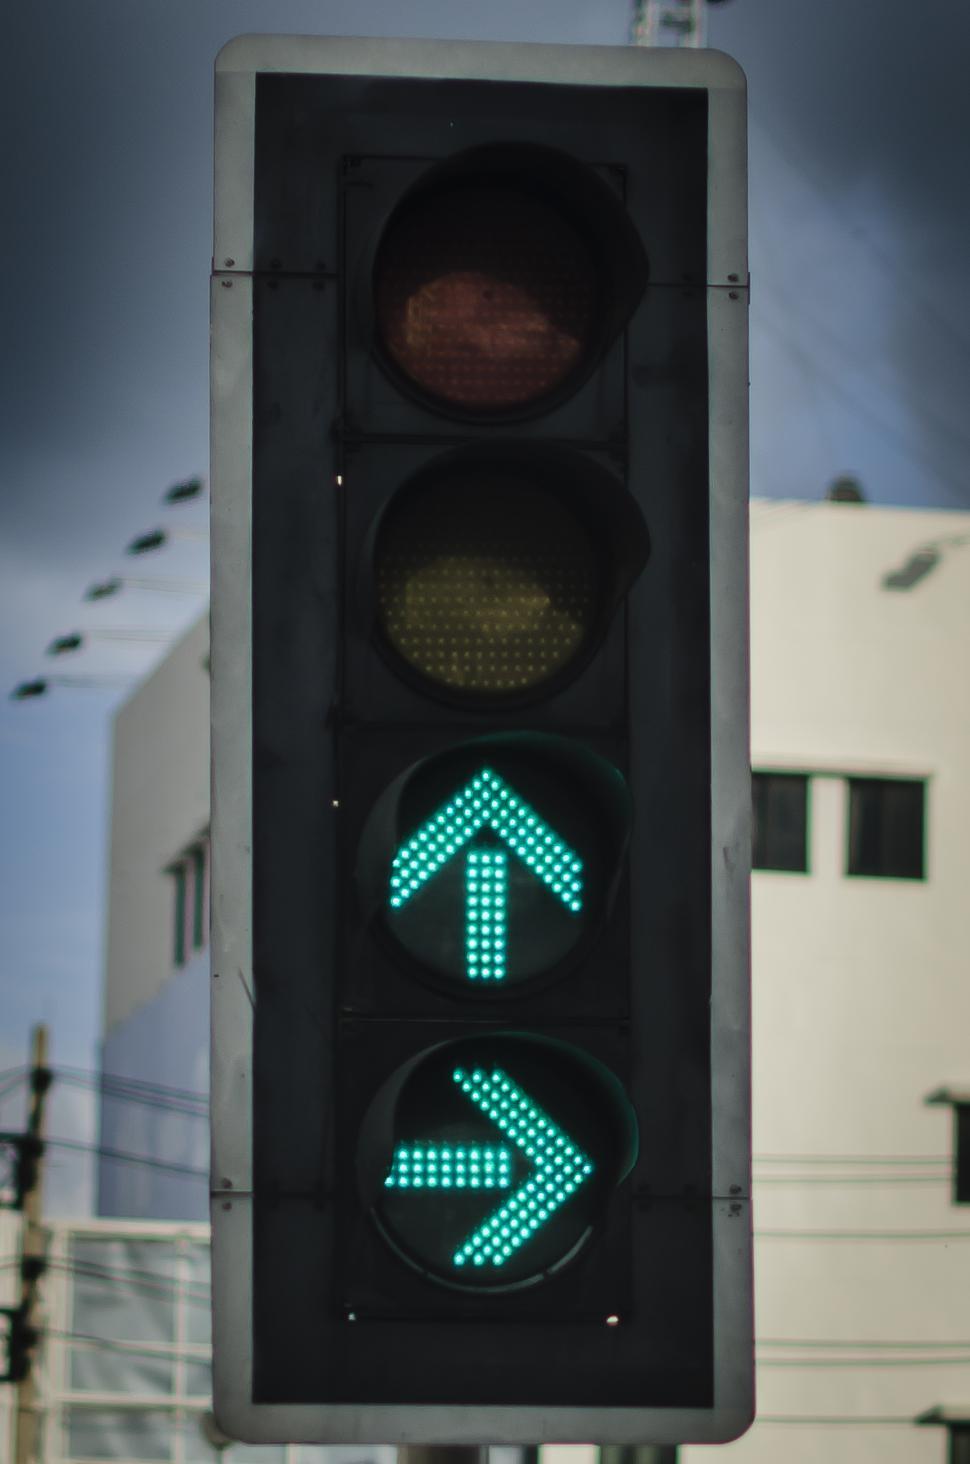 Free Image of Traffic Light  